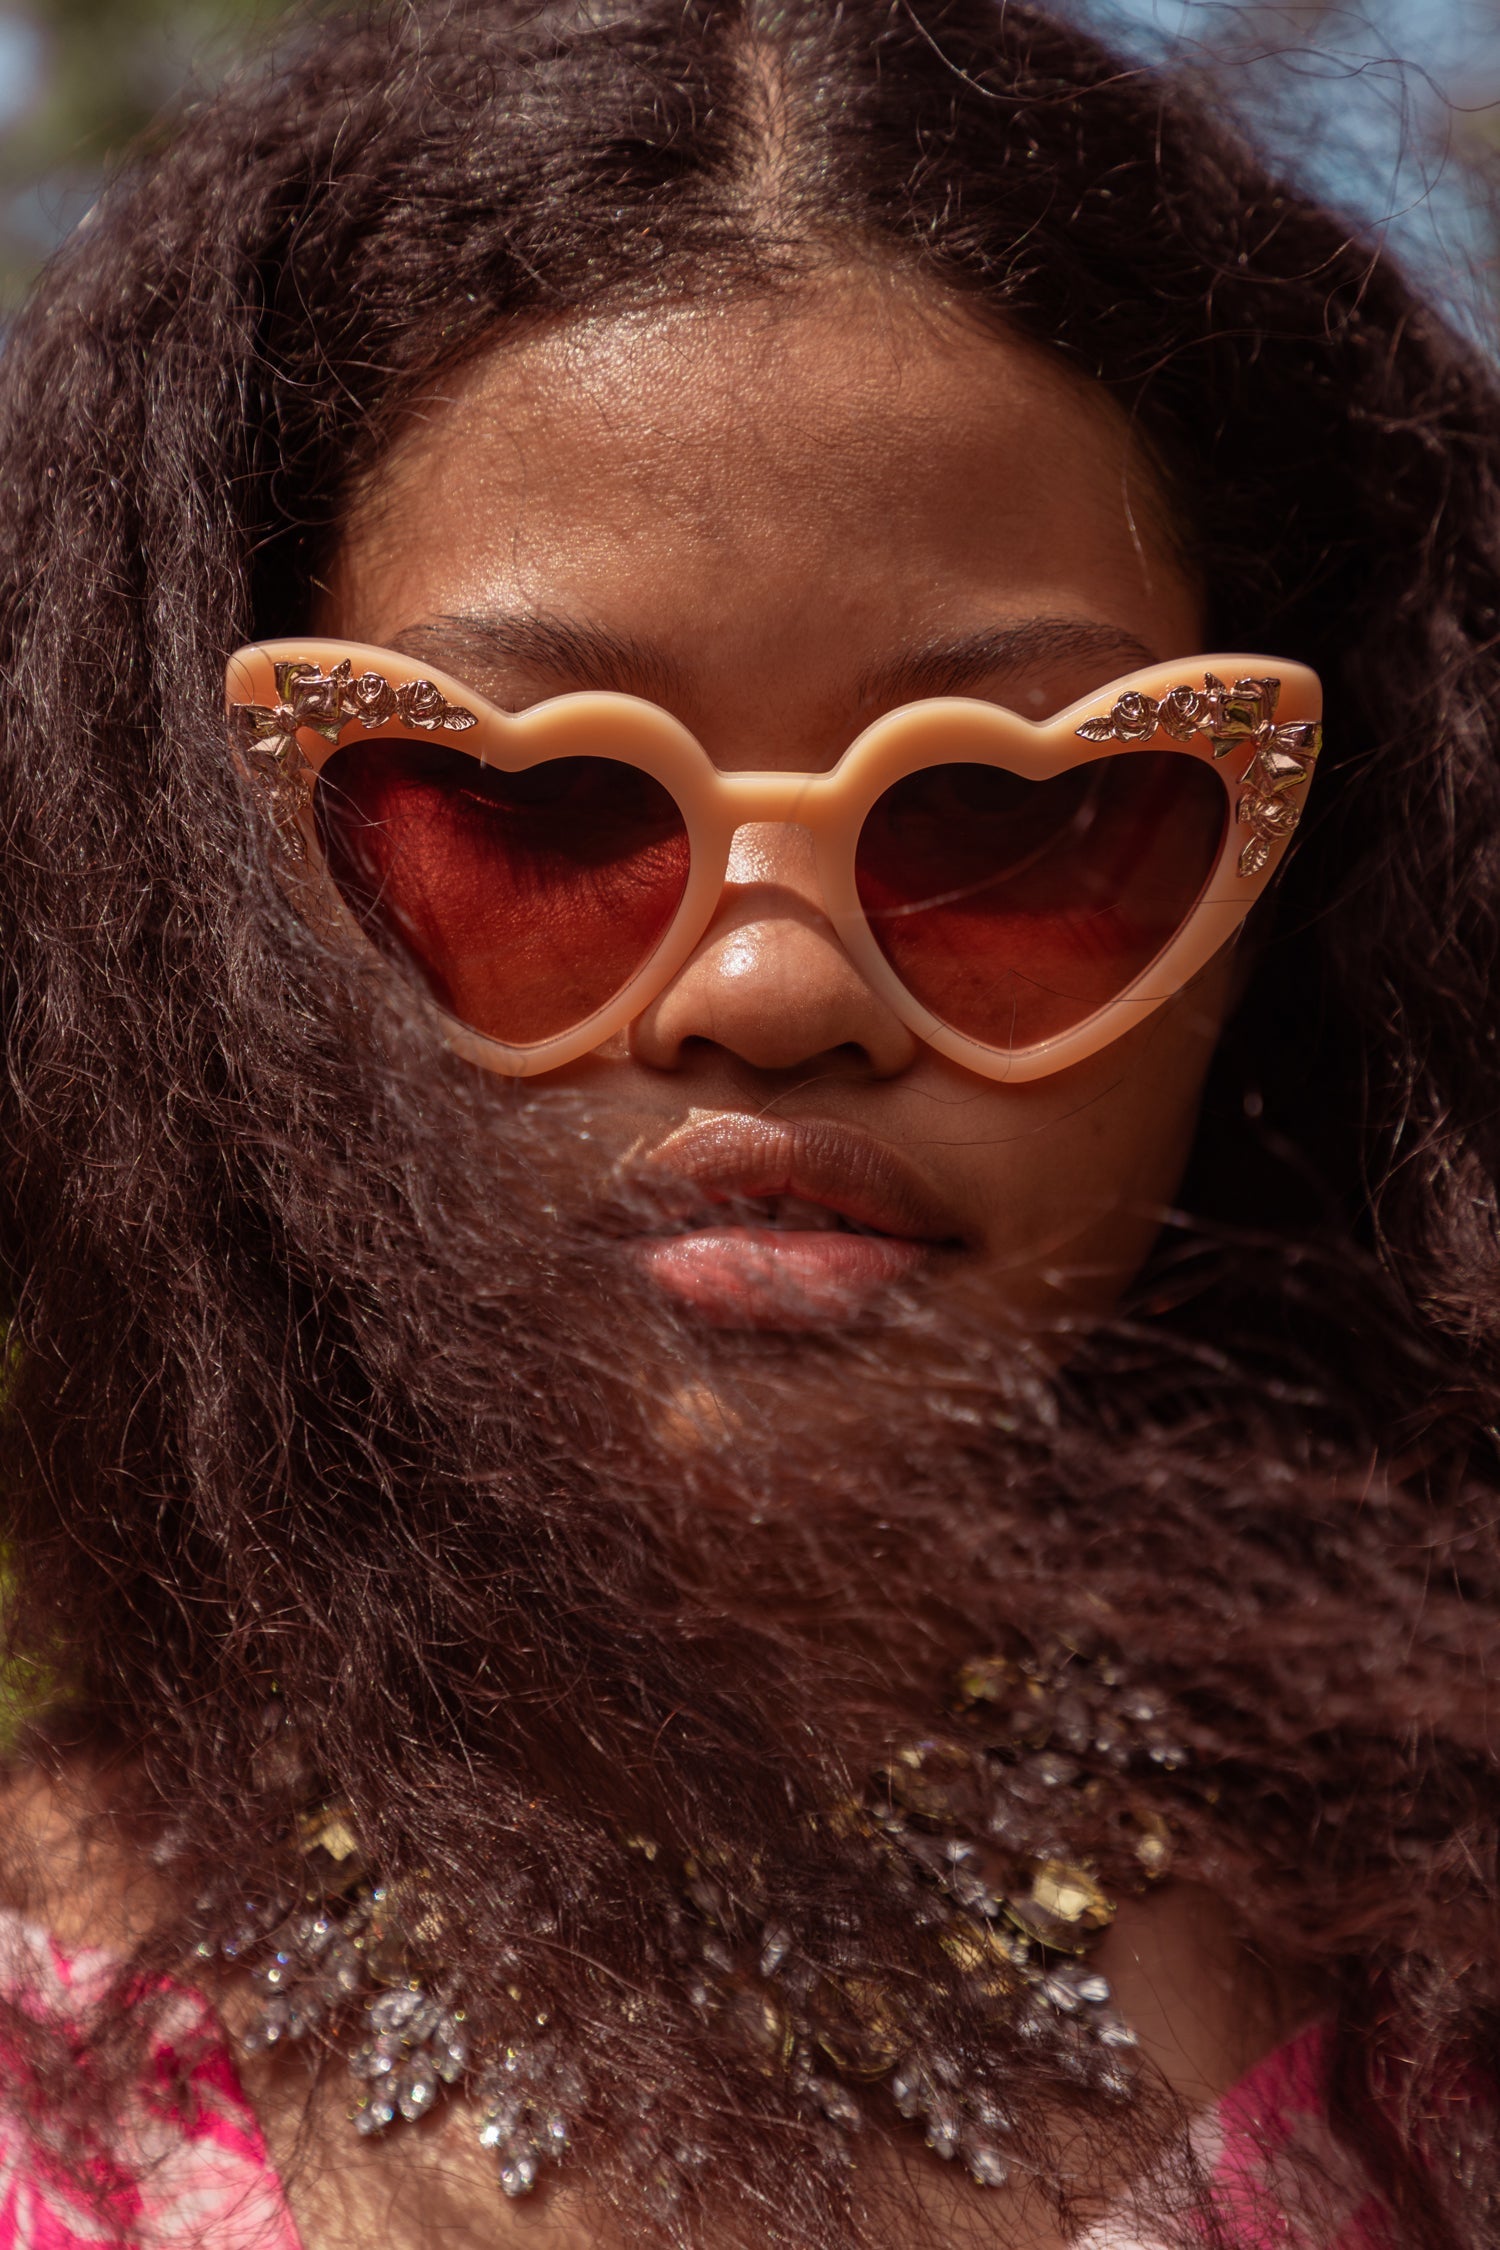 Womens heart shaped golden peach sunglasses with gem detail.